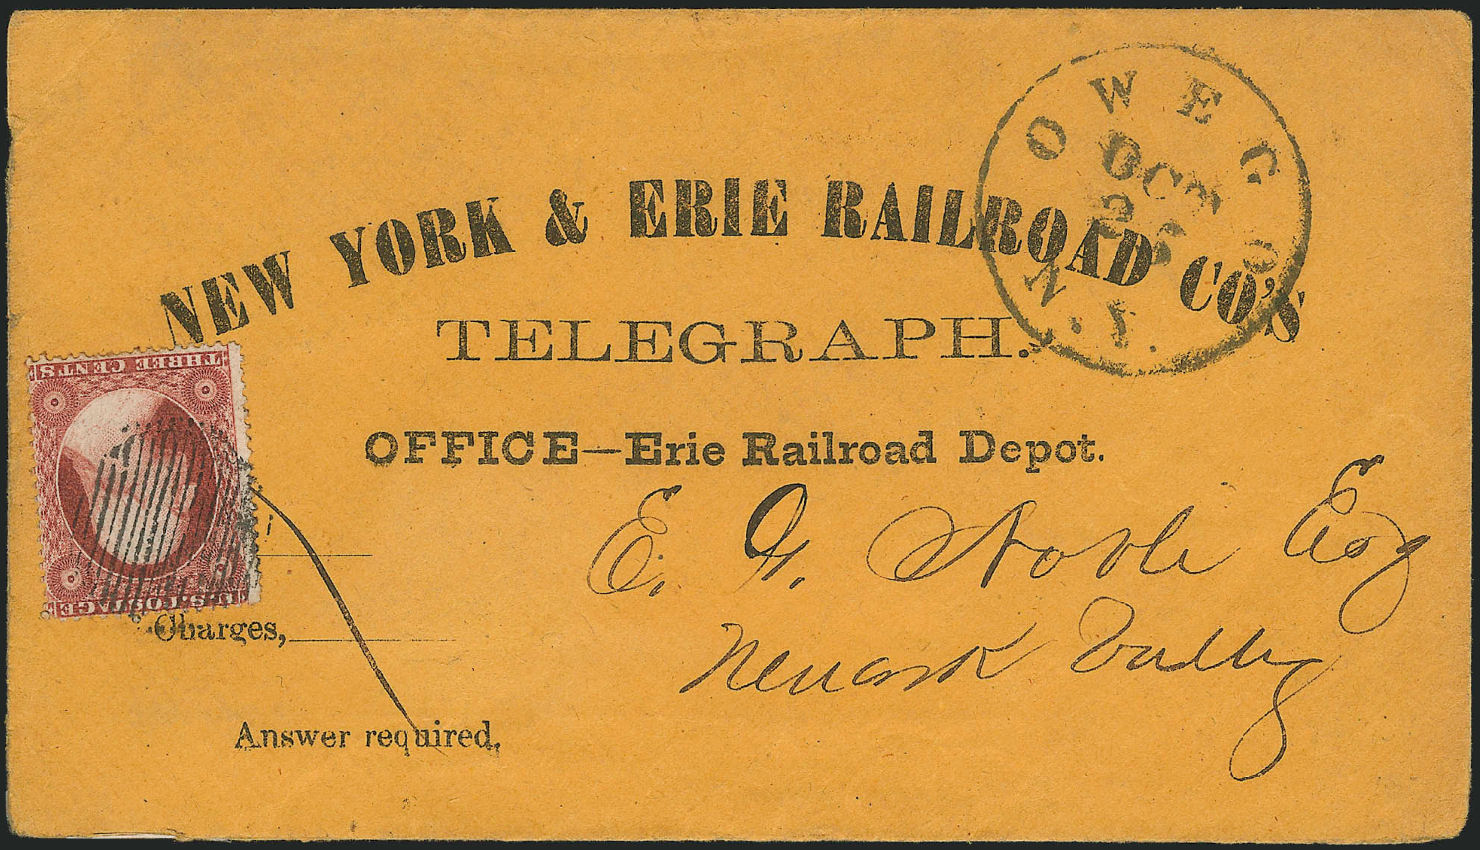 New York & Erie Railroad - Erie Depot